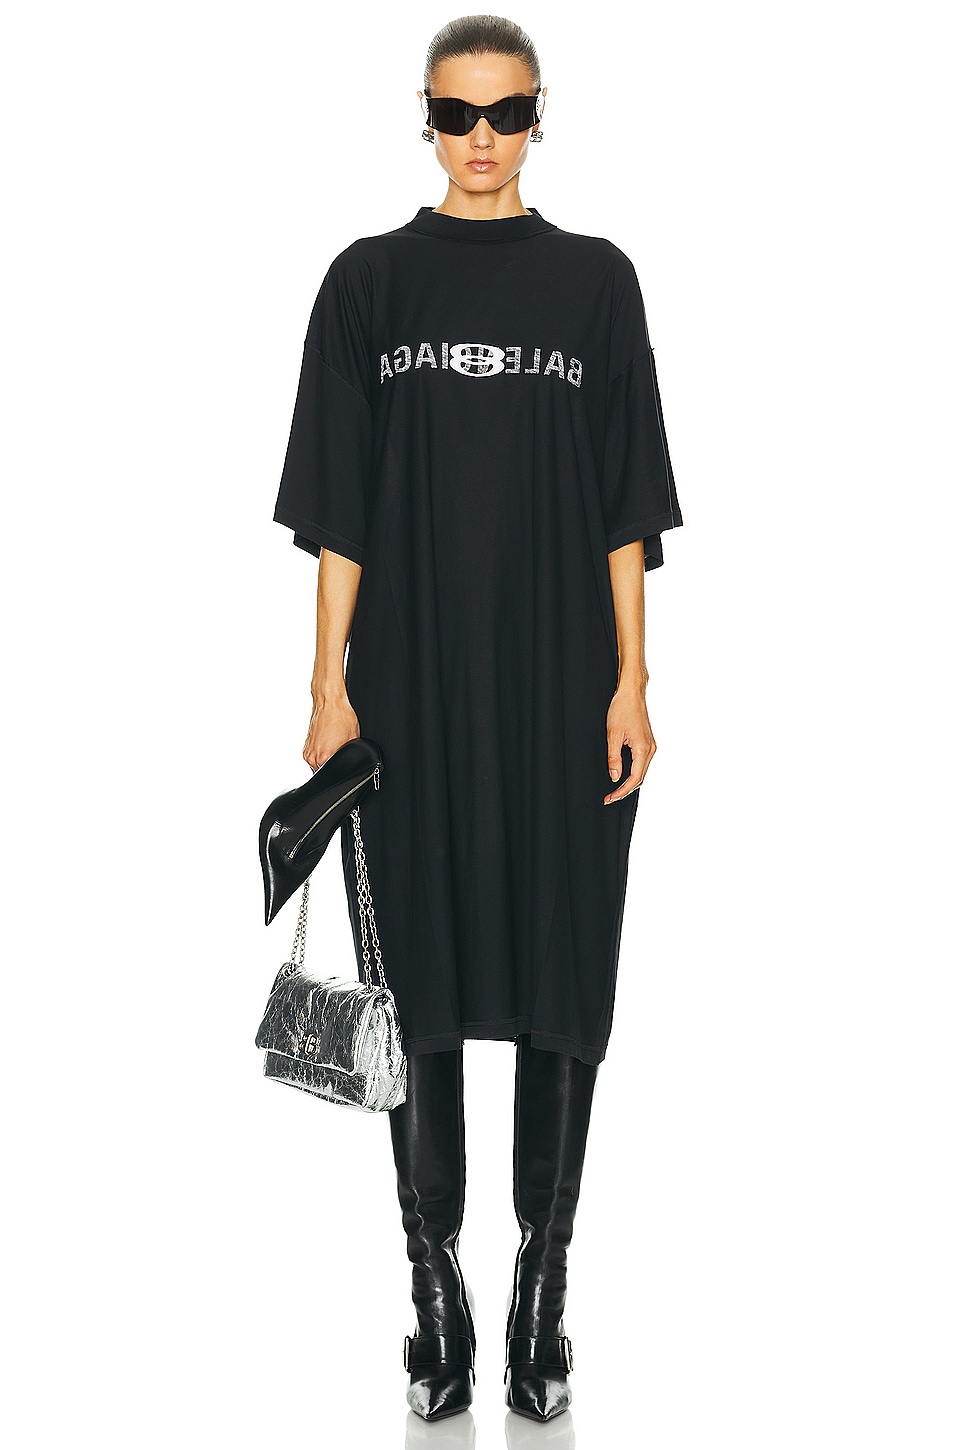 Image 1 of Balenciaga T-Shirt Dress in Faded Black & White